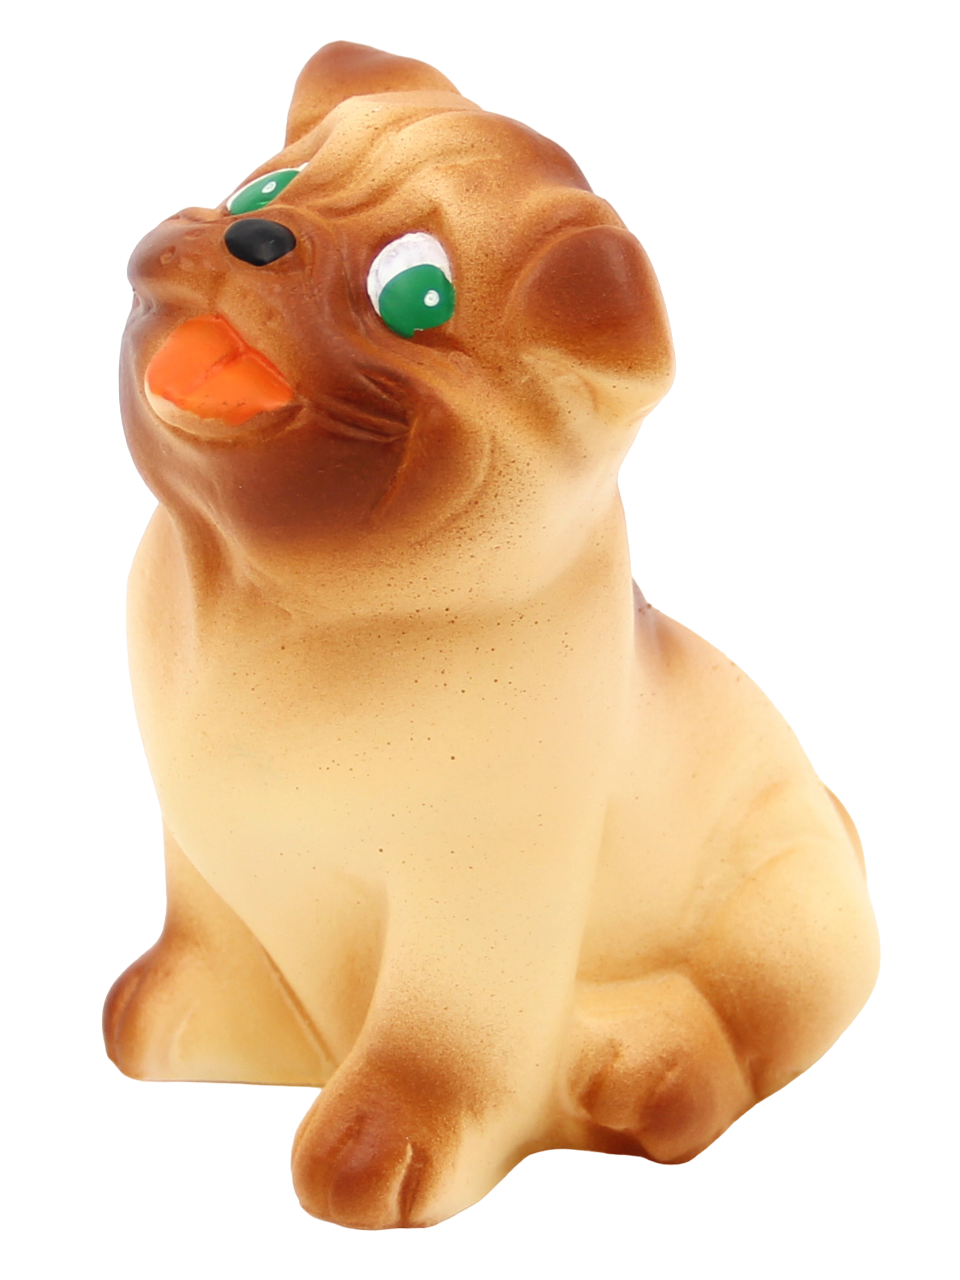 Кудесники: Собачка Мопс - фигурка-игрушка из ПВХ Пластизоля (Резиновая игрушка), СИ-315